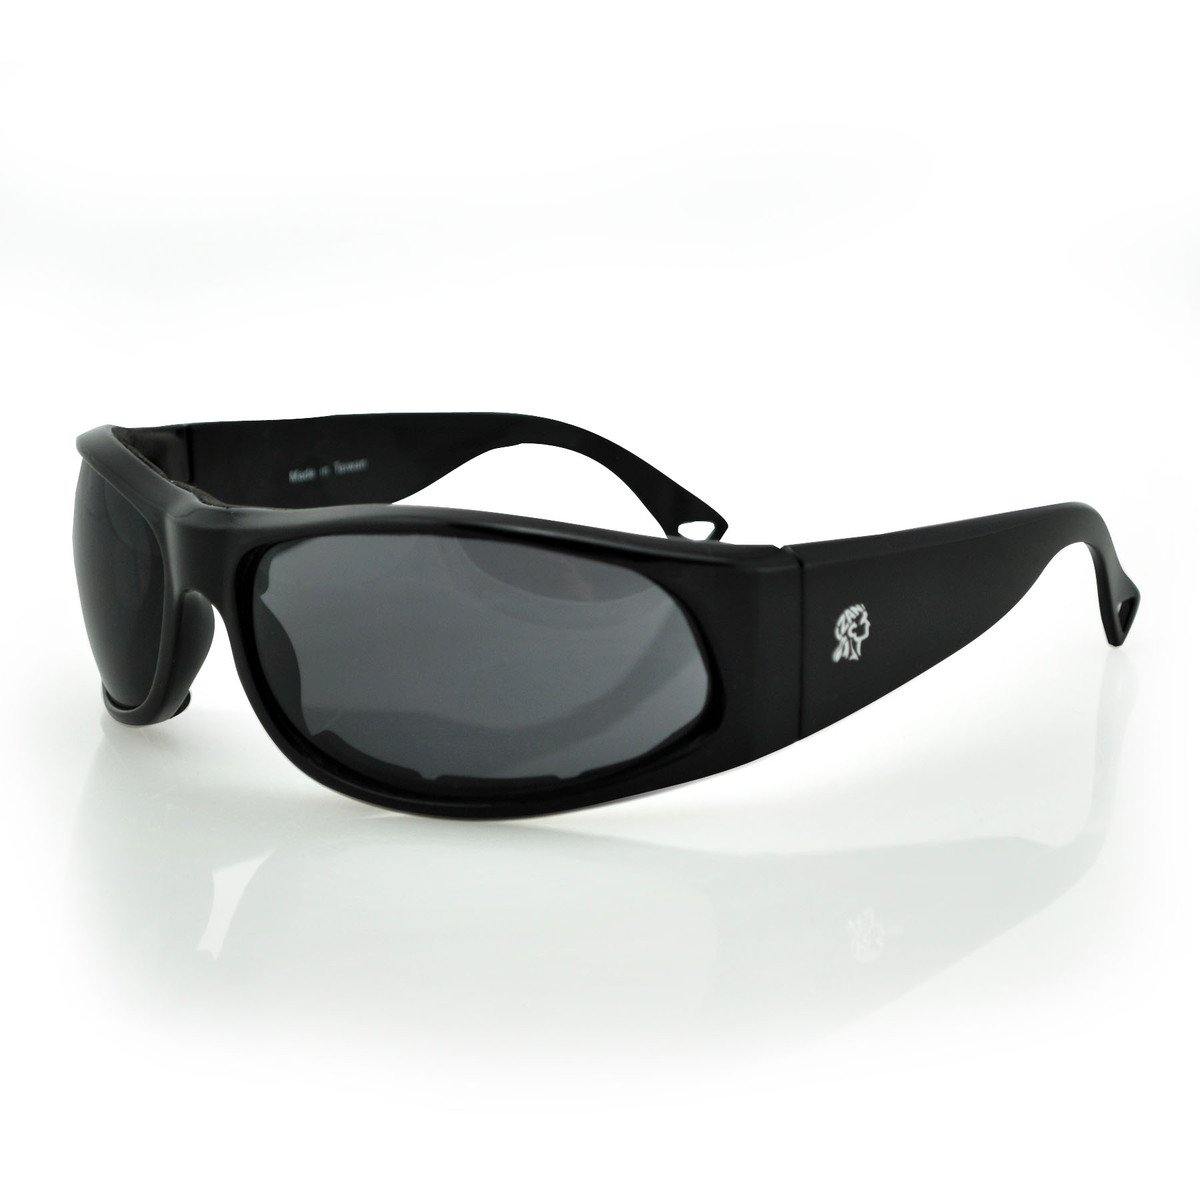 Zan headgear® California Sunglasses - American Legend Rider